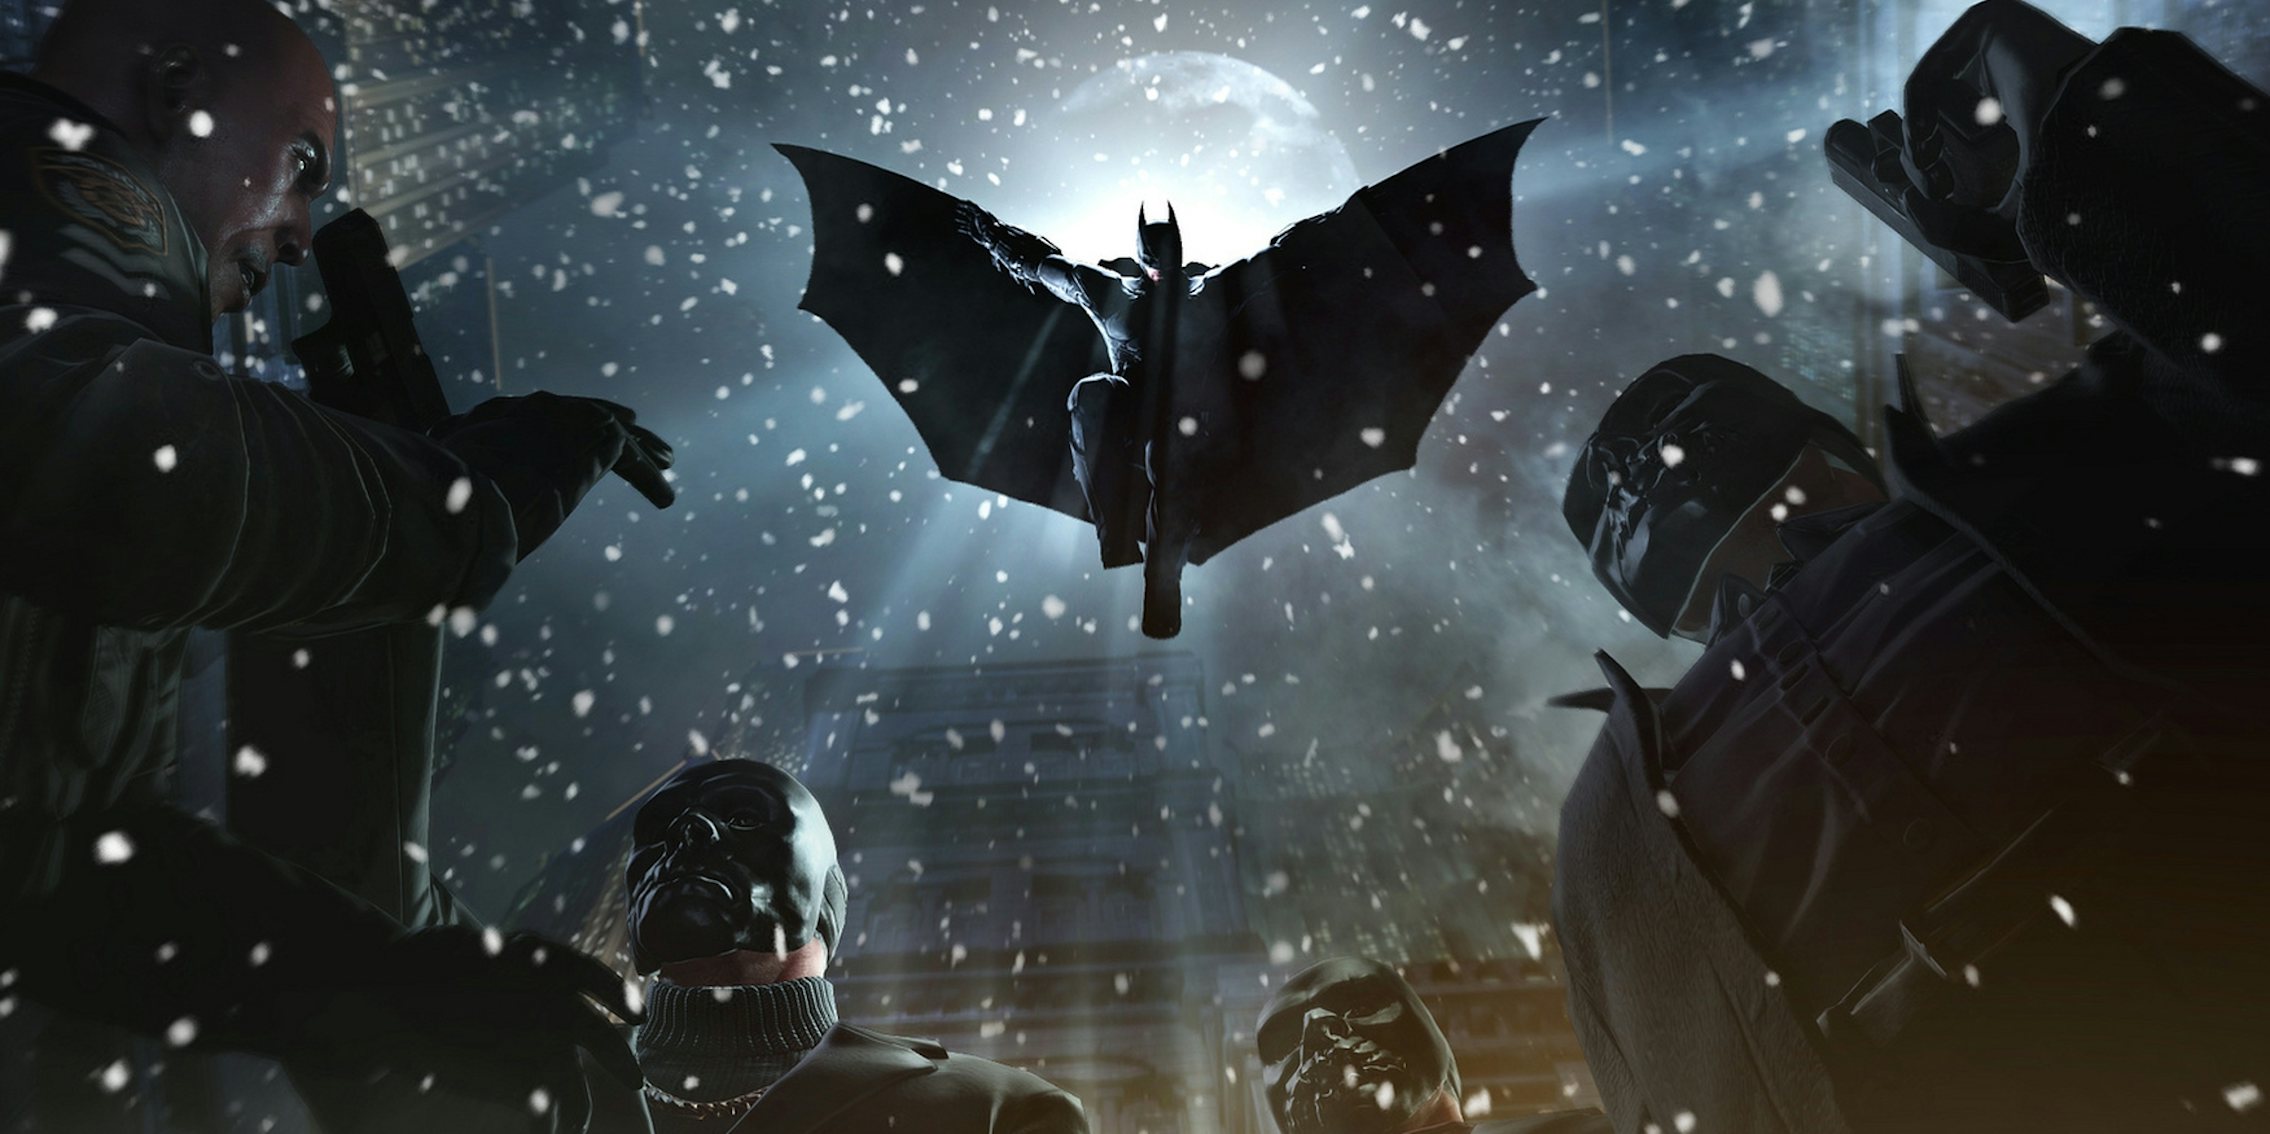 Batman Rewatch: The LEGO Batman Movie and The Batman bury the Dark Knight  to heap on praise